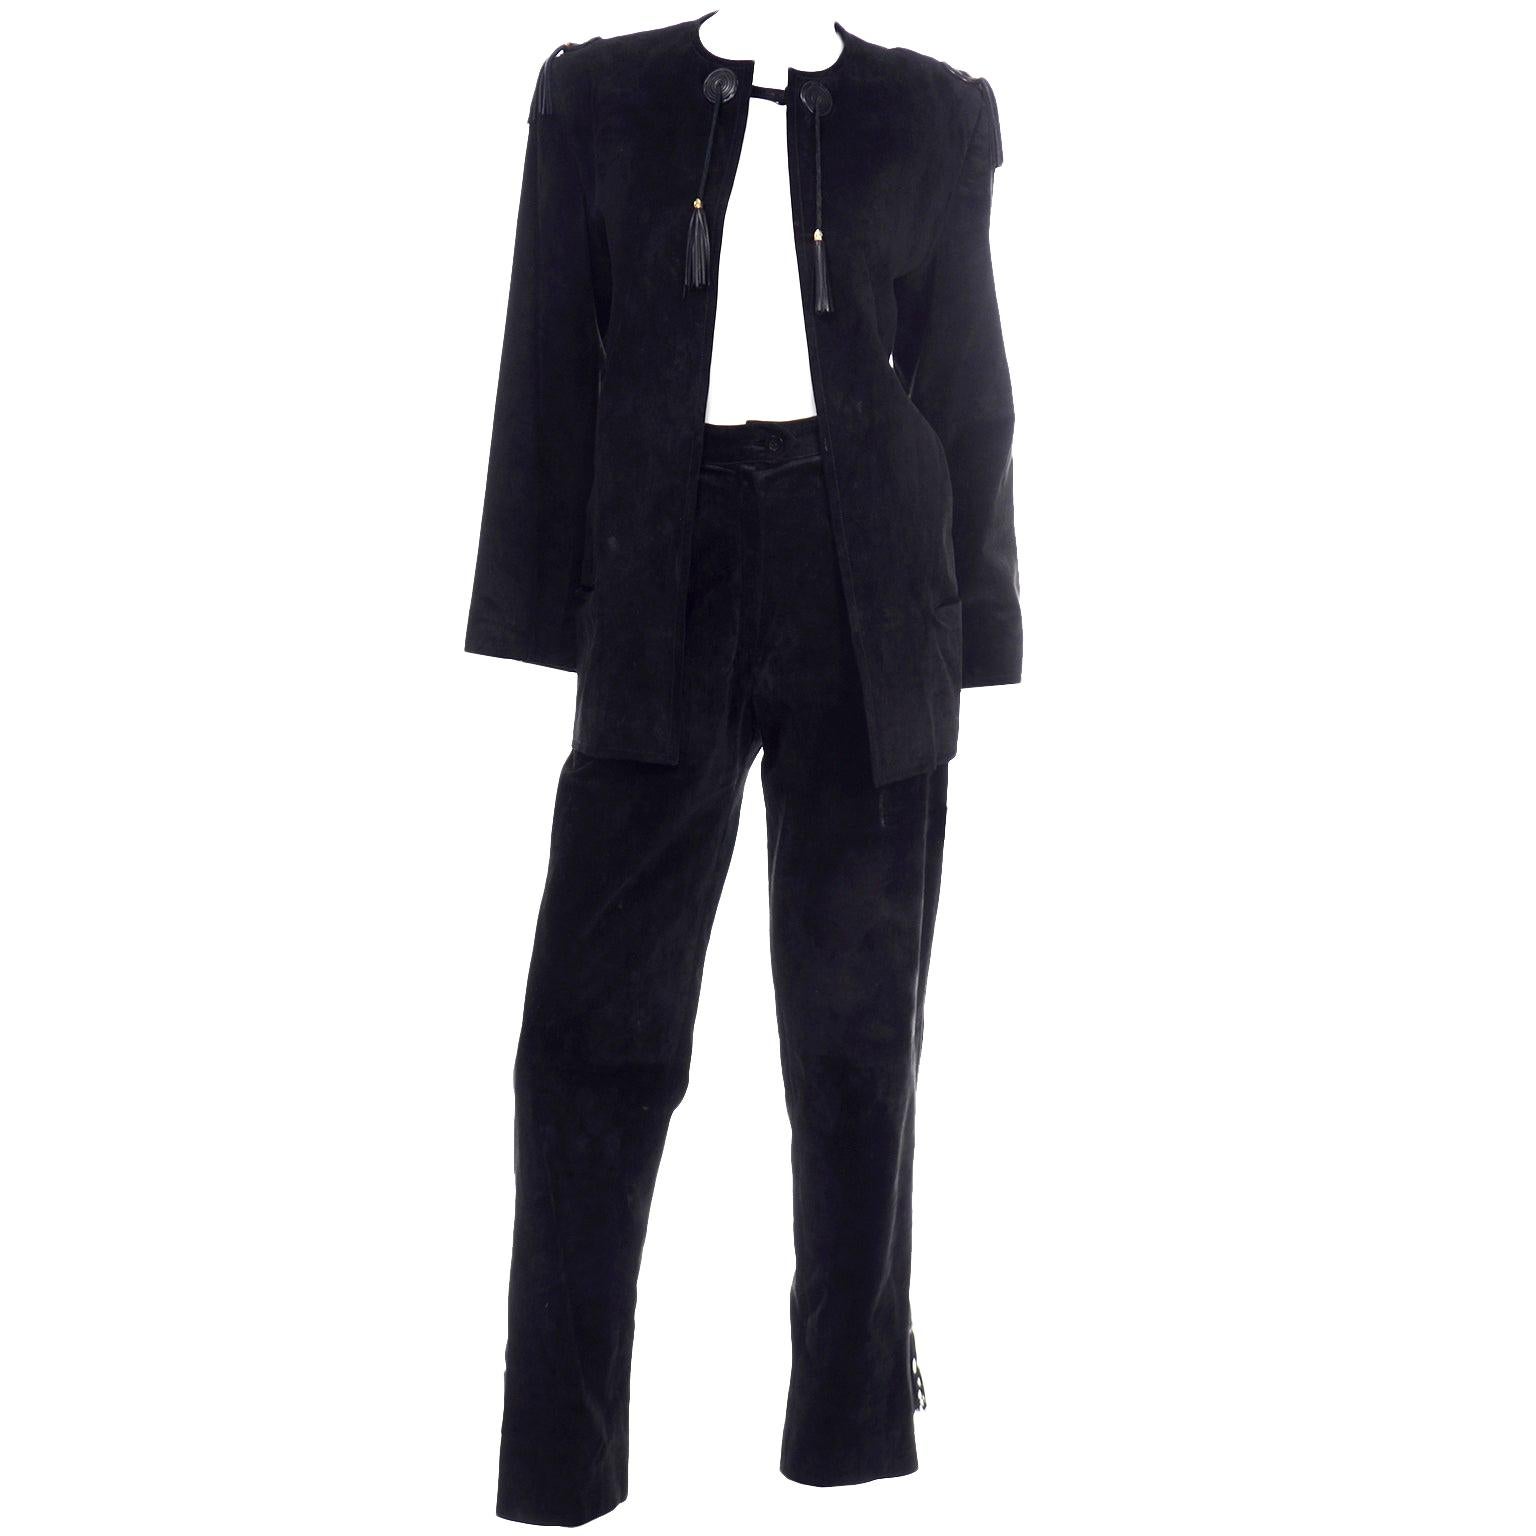 Vintage Gucci 1970s Black Suede Pants & Jacket Suit w Tassels & Monogram Lining